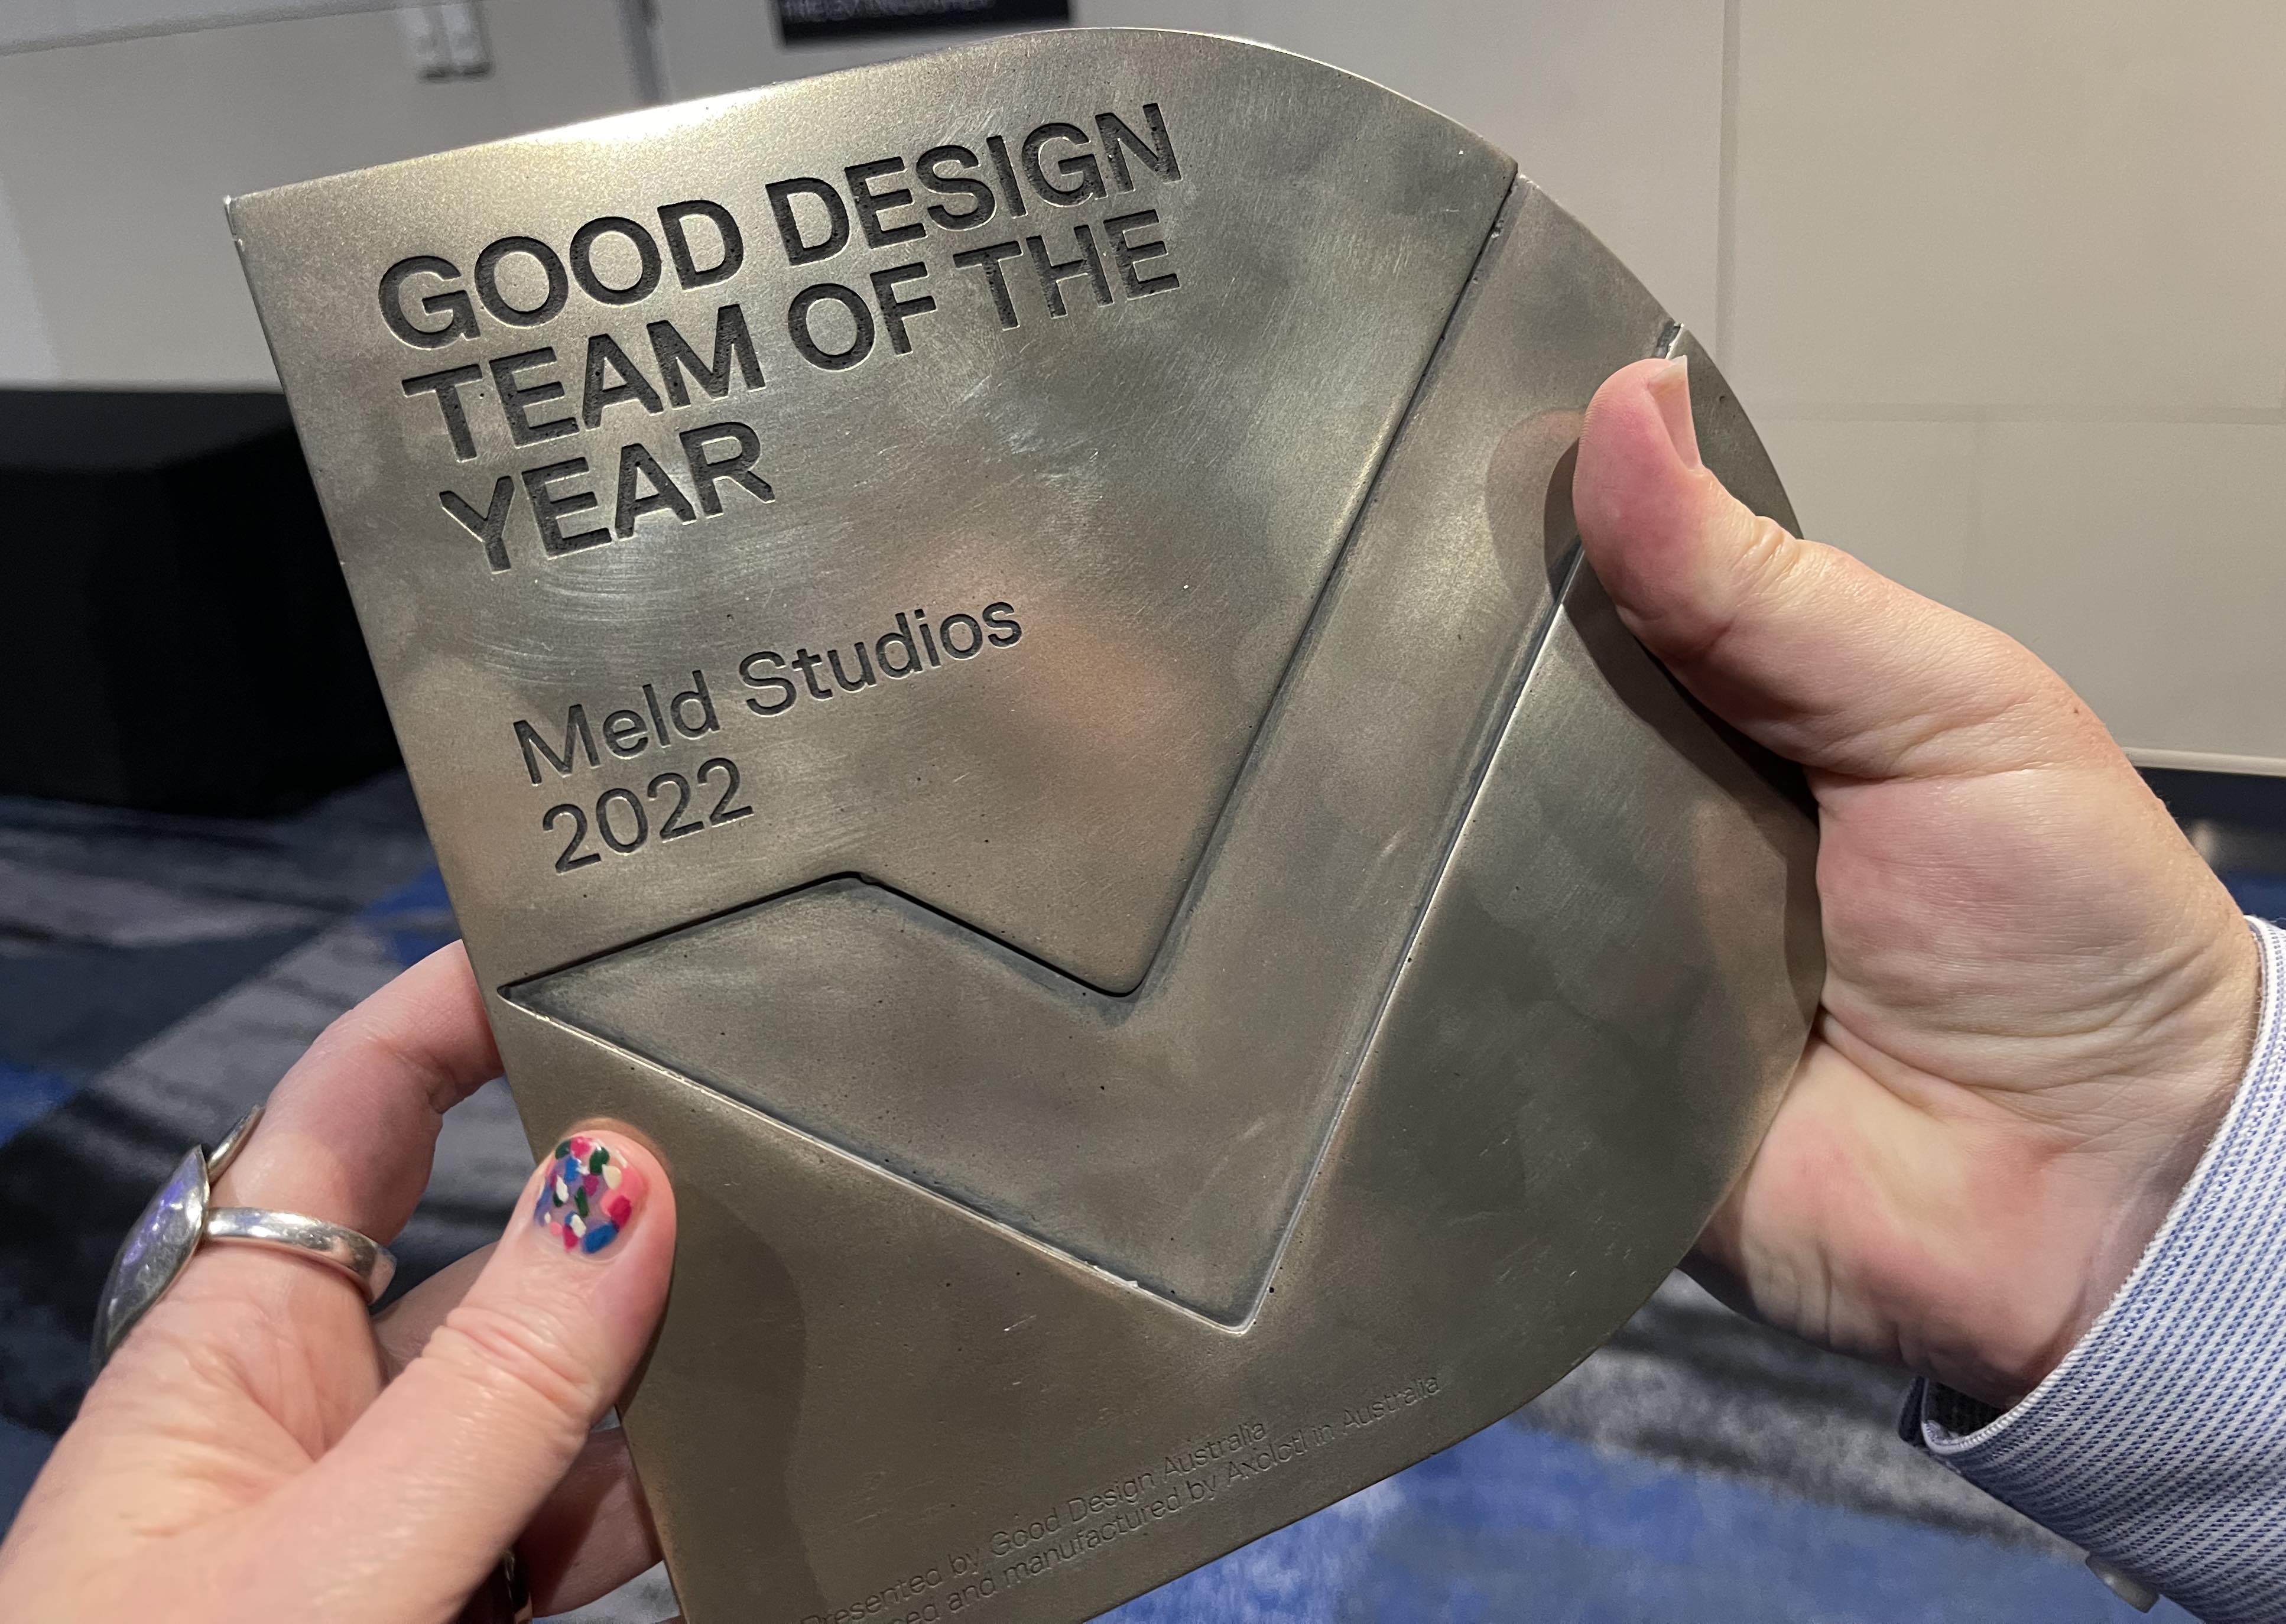 Good Design Team of the Year - Meld Studios